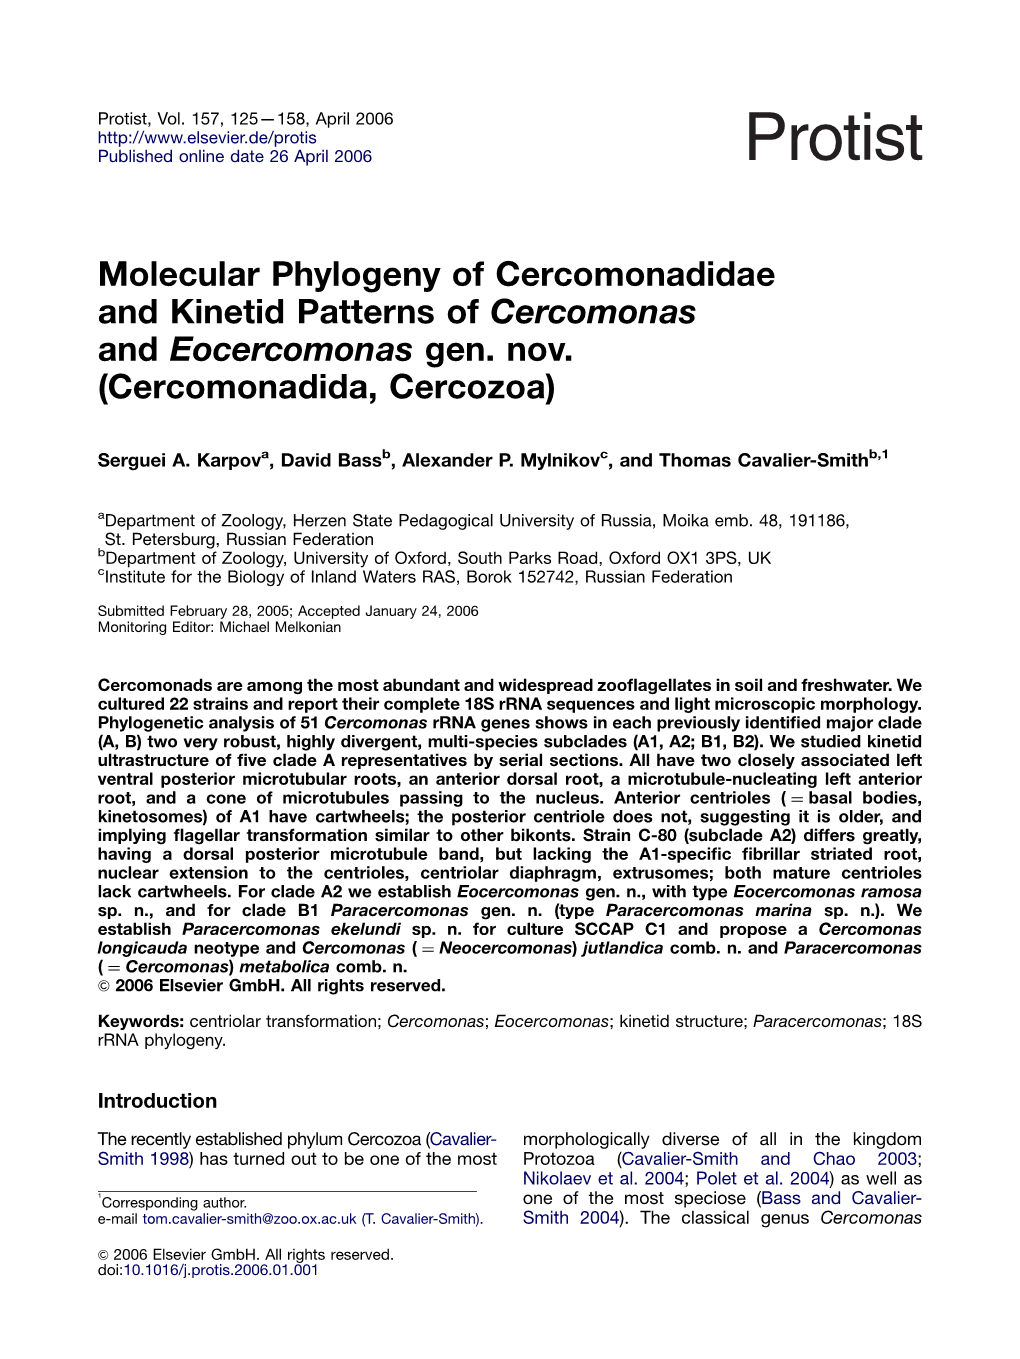 Molecular Phylogeny of Cercomonadidae and Kinetid Patterns of Cercomonas and Eocercomonas Gen